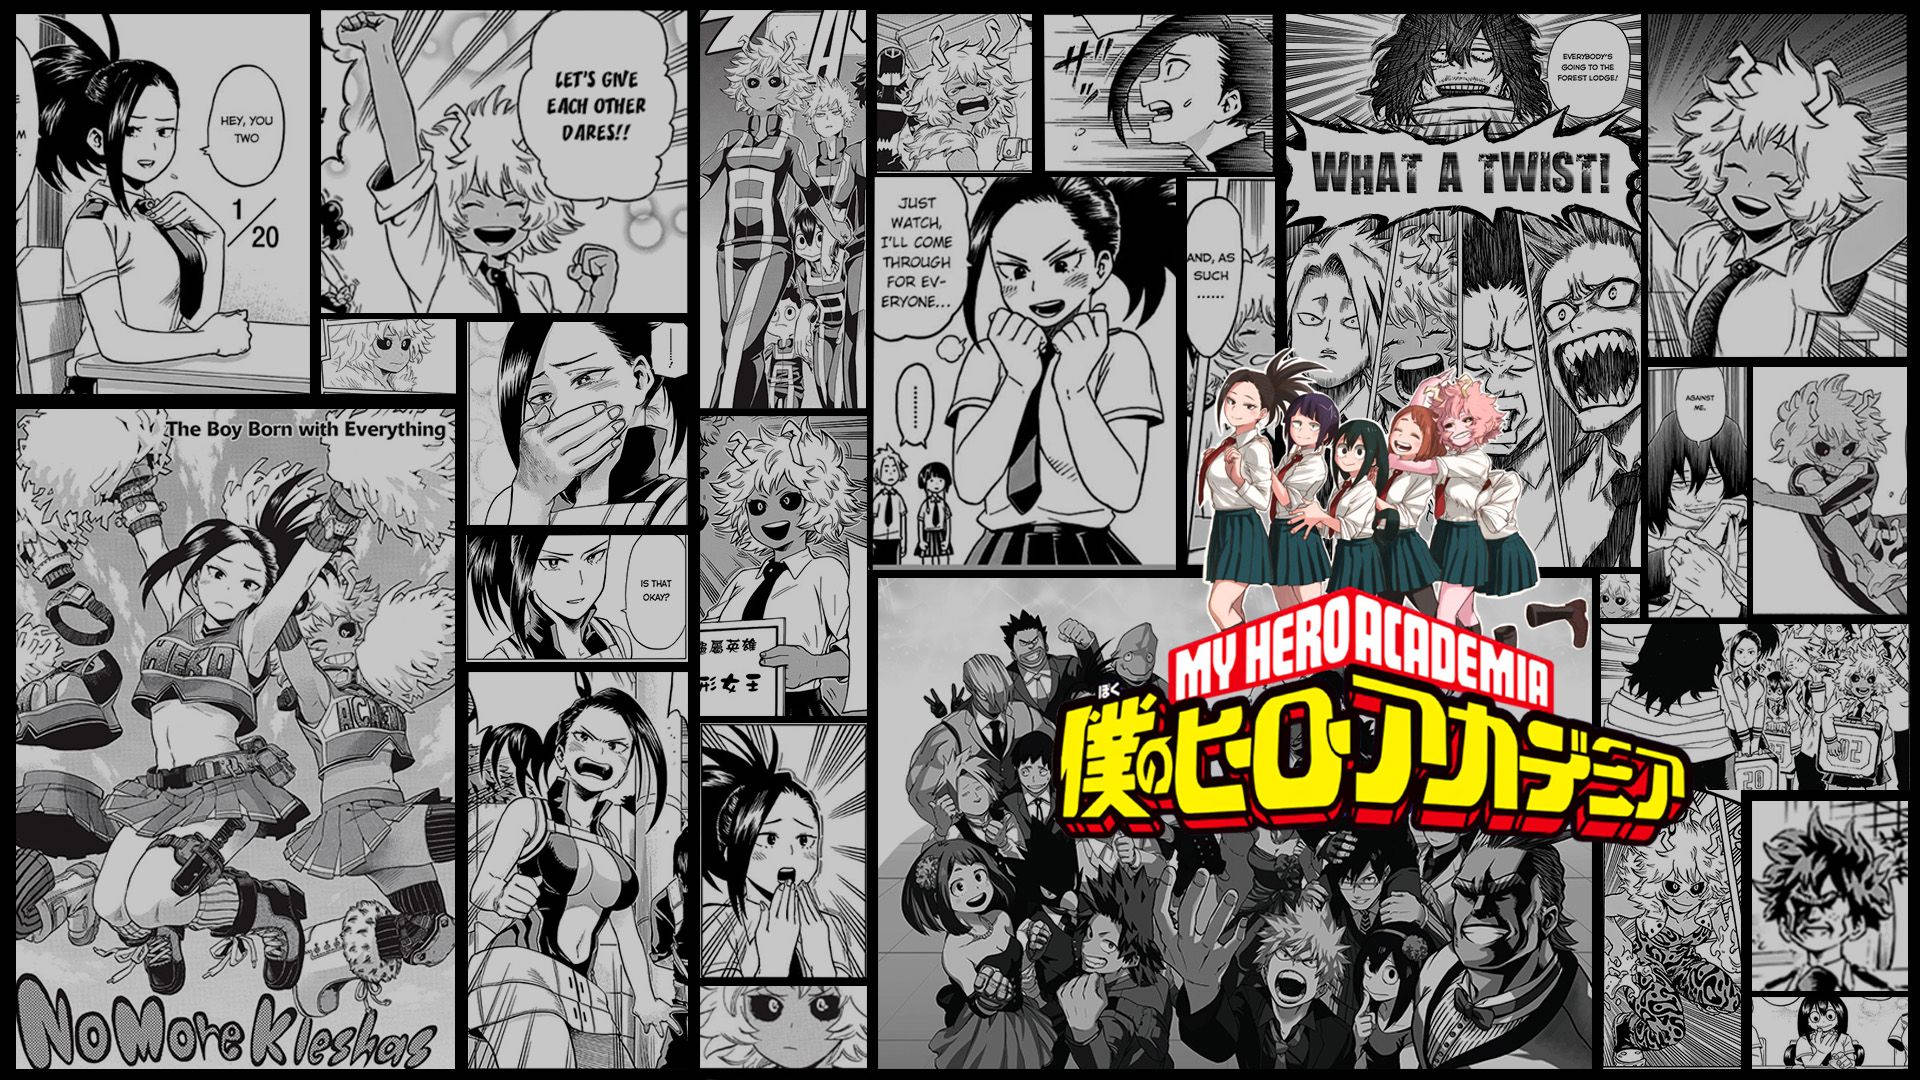 1920X1080 Manga Wallpaper and Background